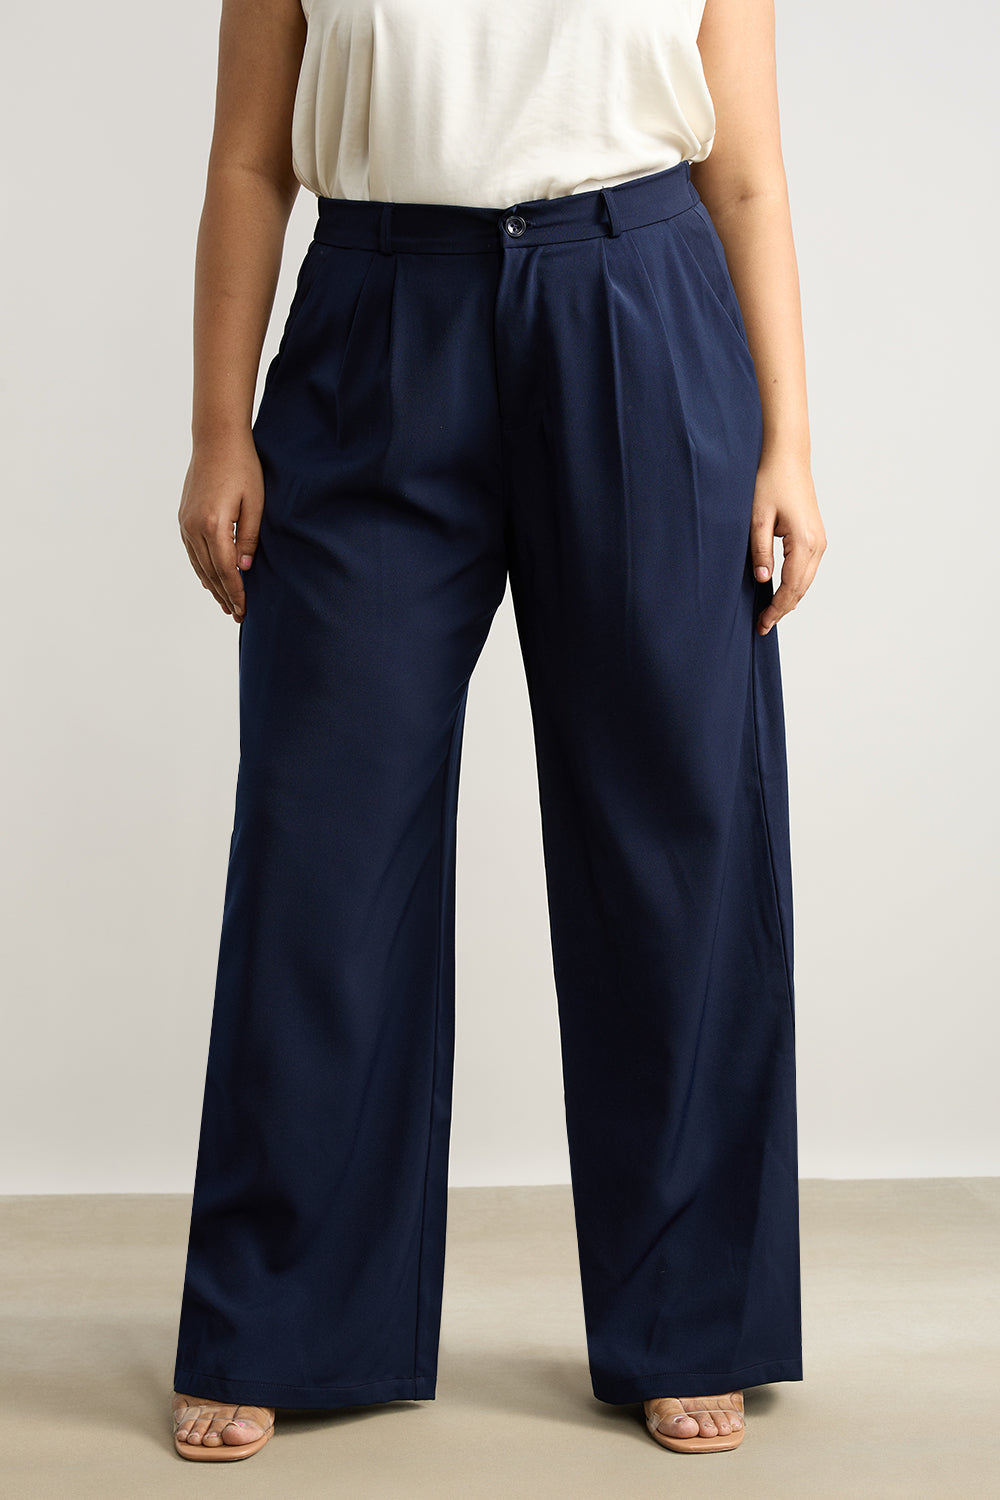 Women's curve pleated navy blue korean pant